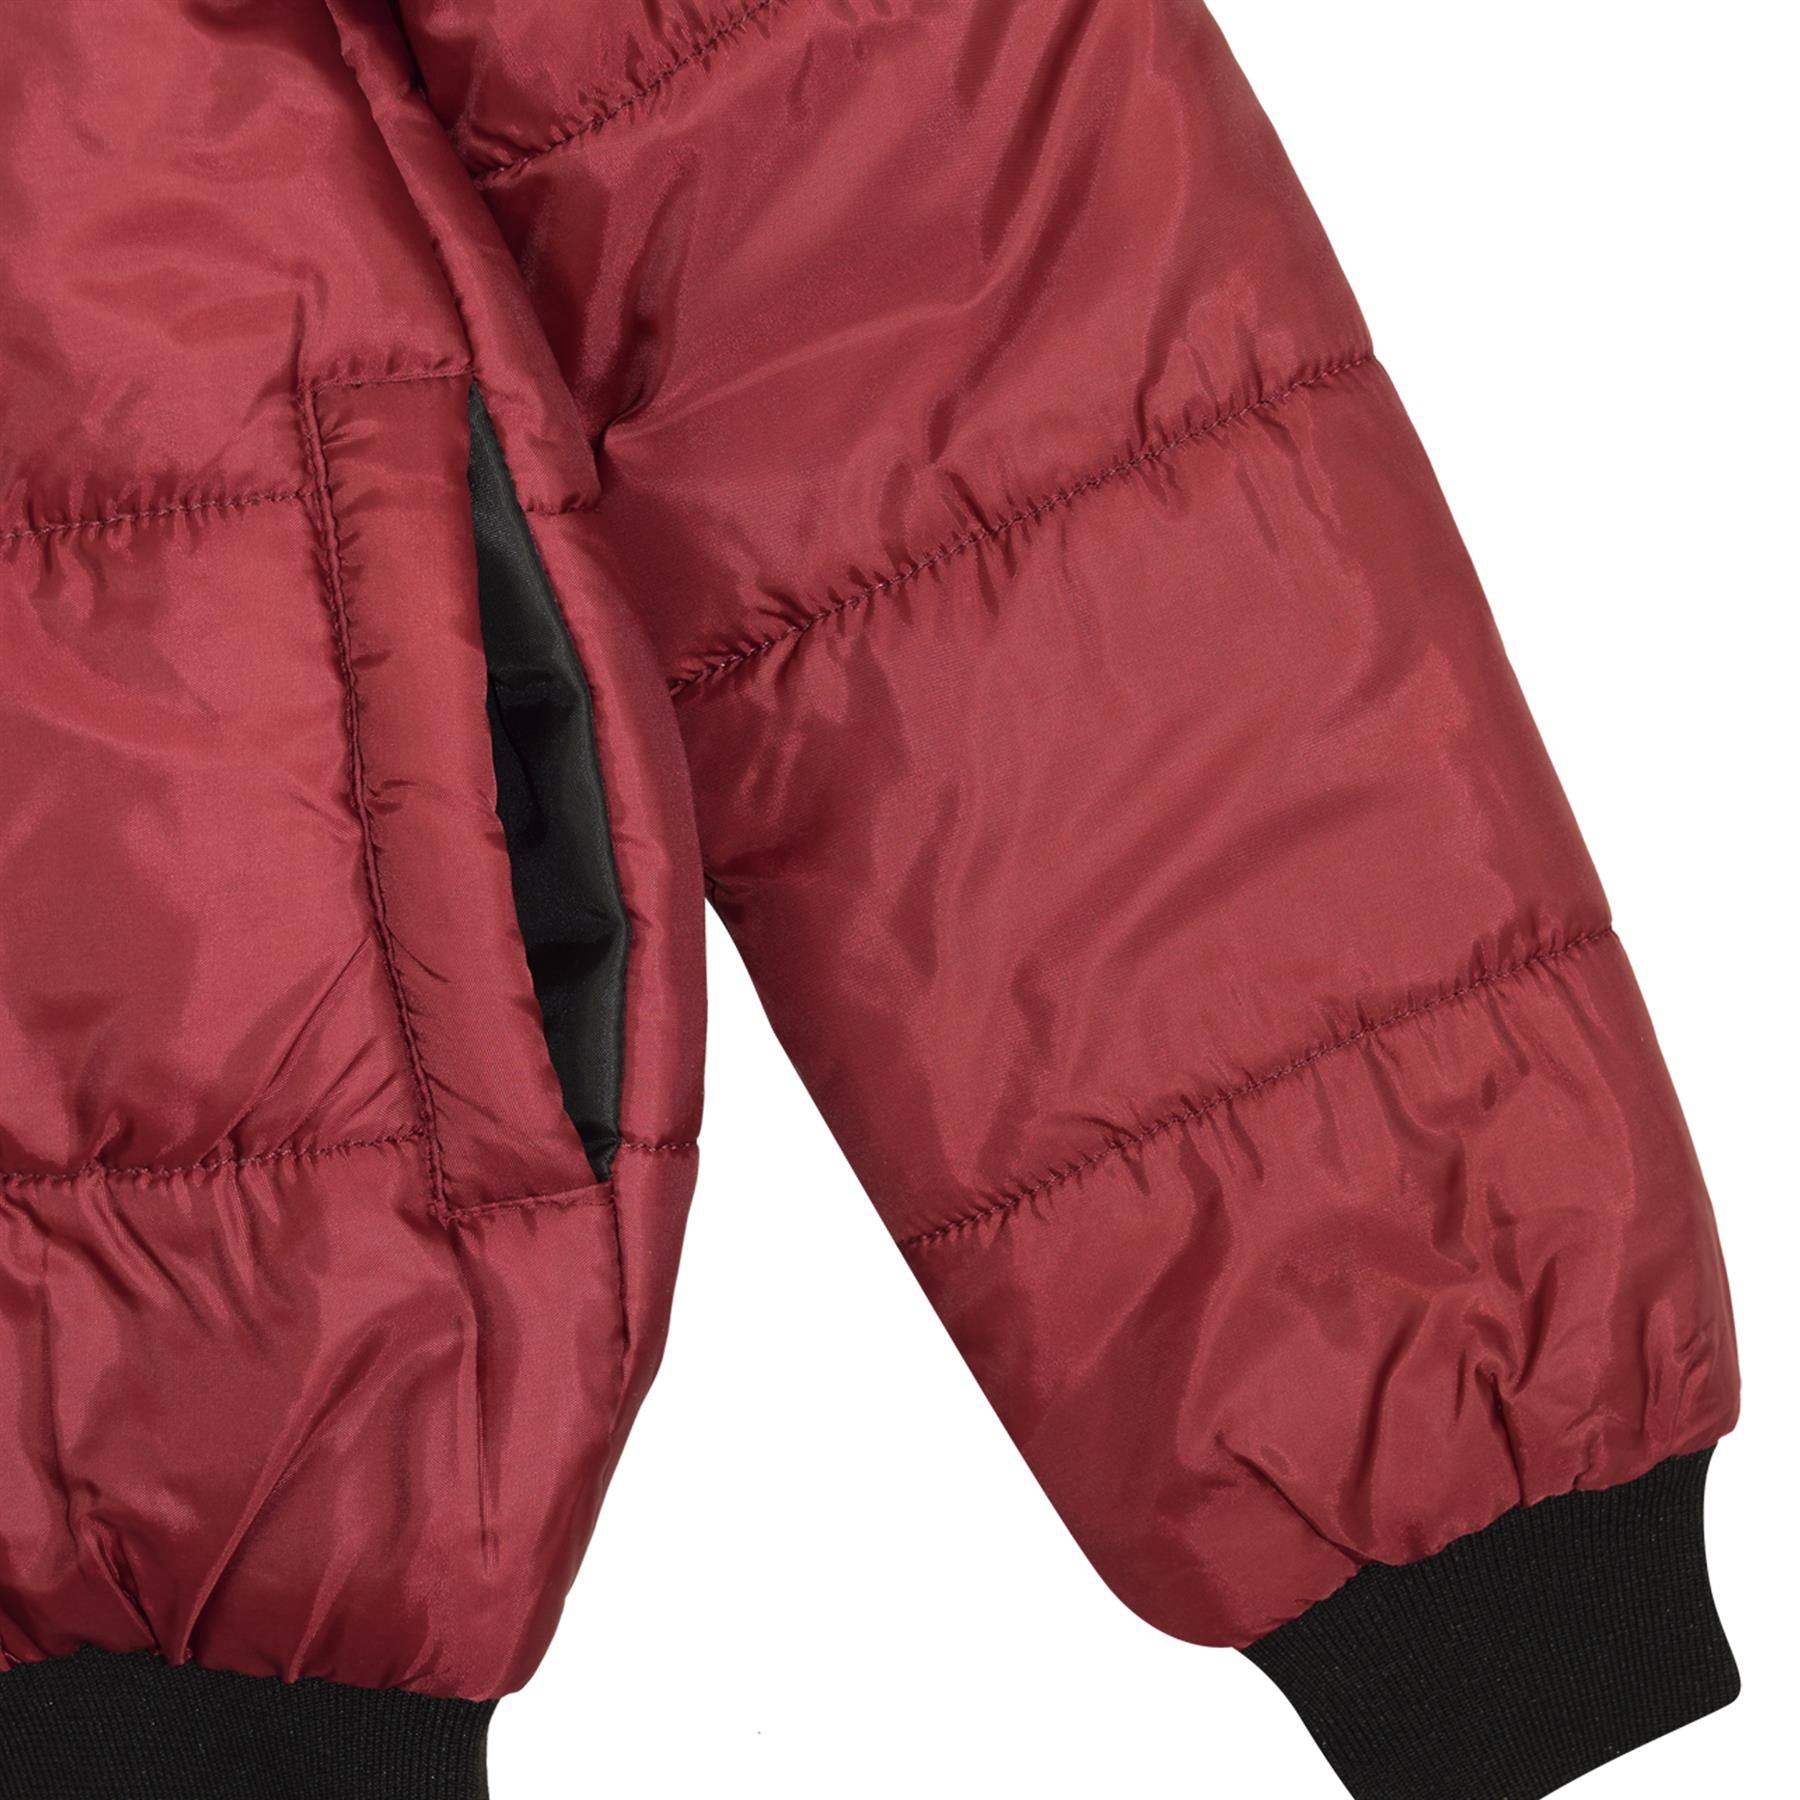 Kids Bomber Jacket Lightweight Puffer Coat School Fashion For Girls Boys 5-13 Yr